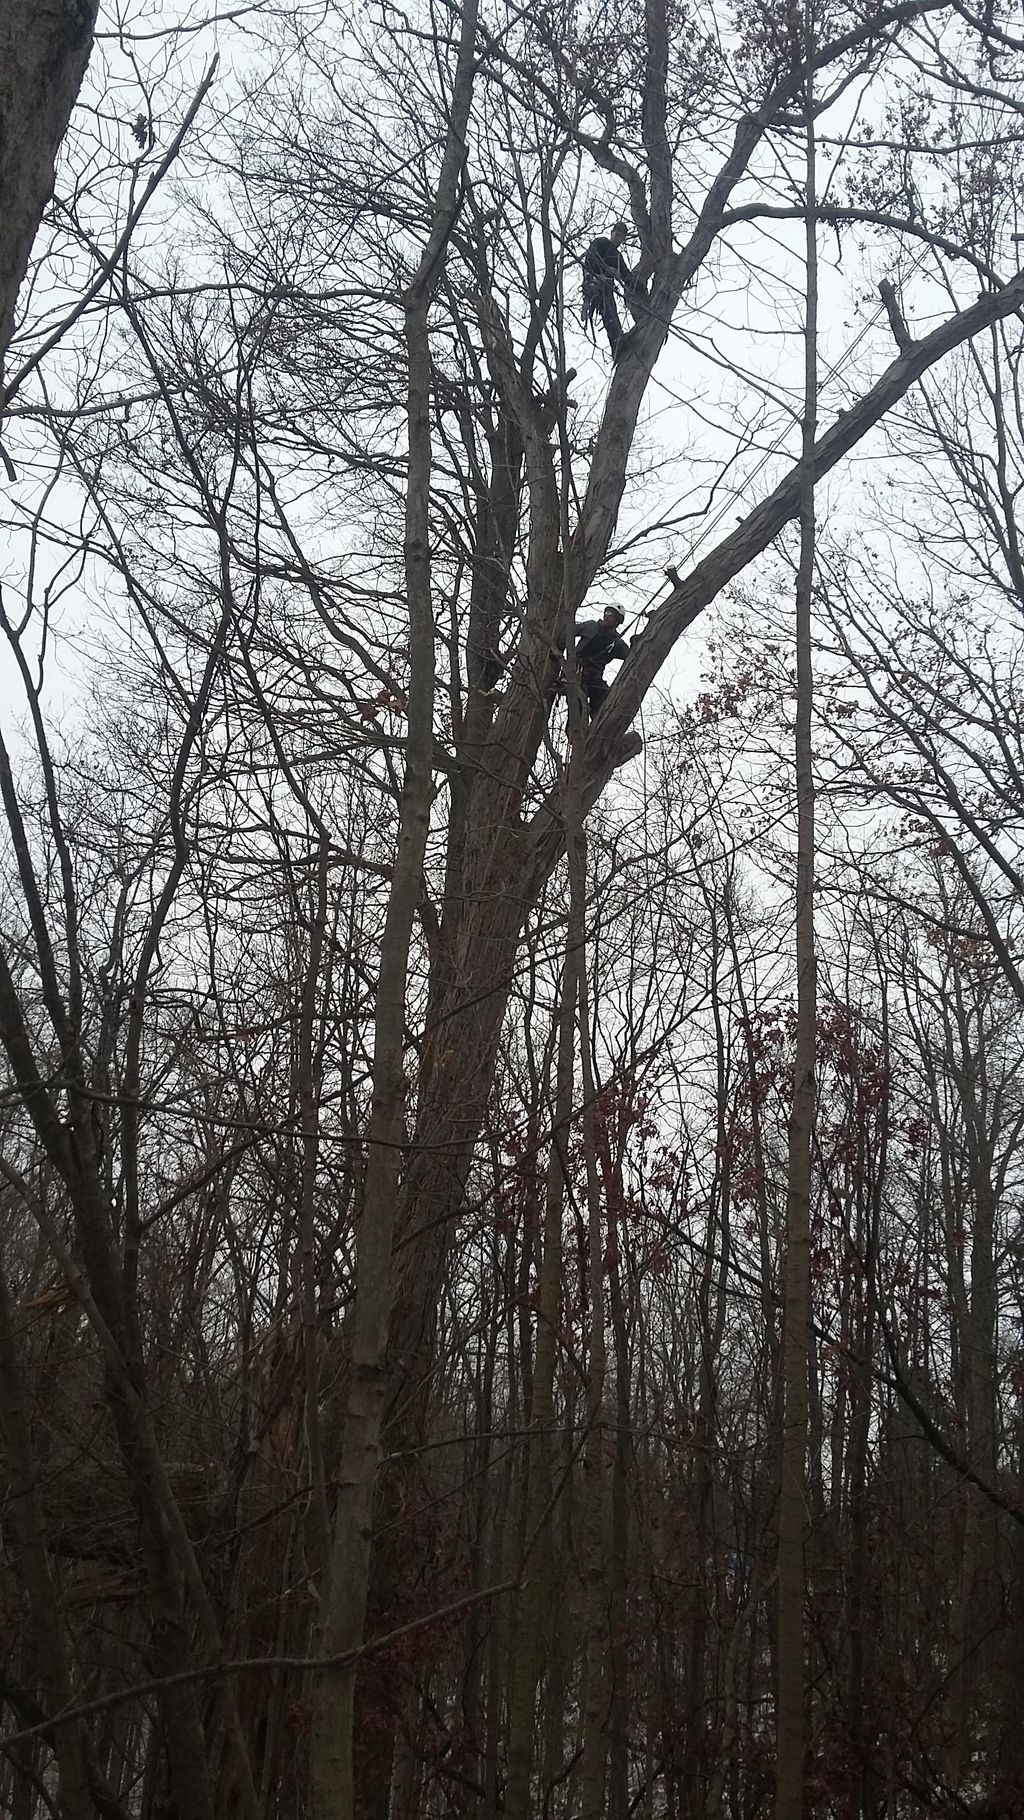 Climbing High Tree Service